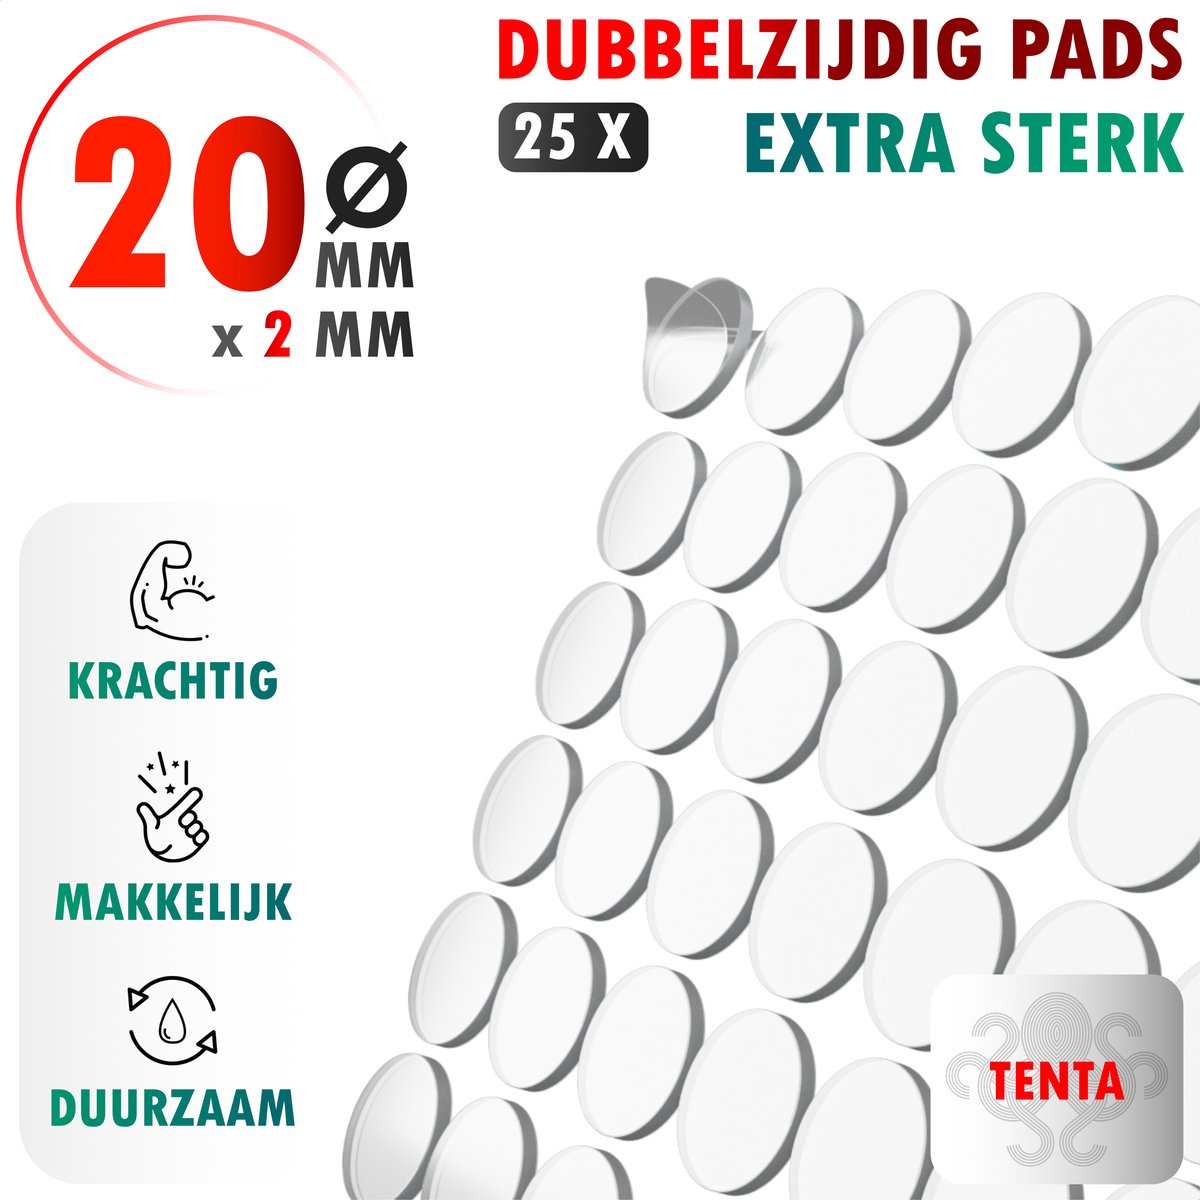 TENTA® Dubbelzijdig Tape Plakkers Extra Sterk - 20mm x 2mm - 25x - TENTA®